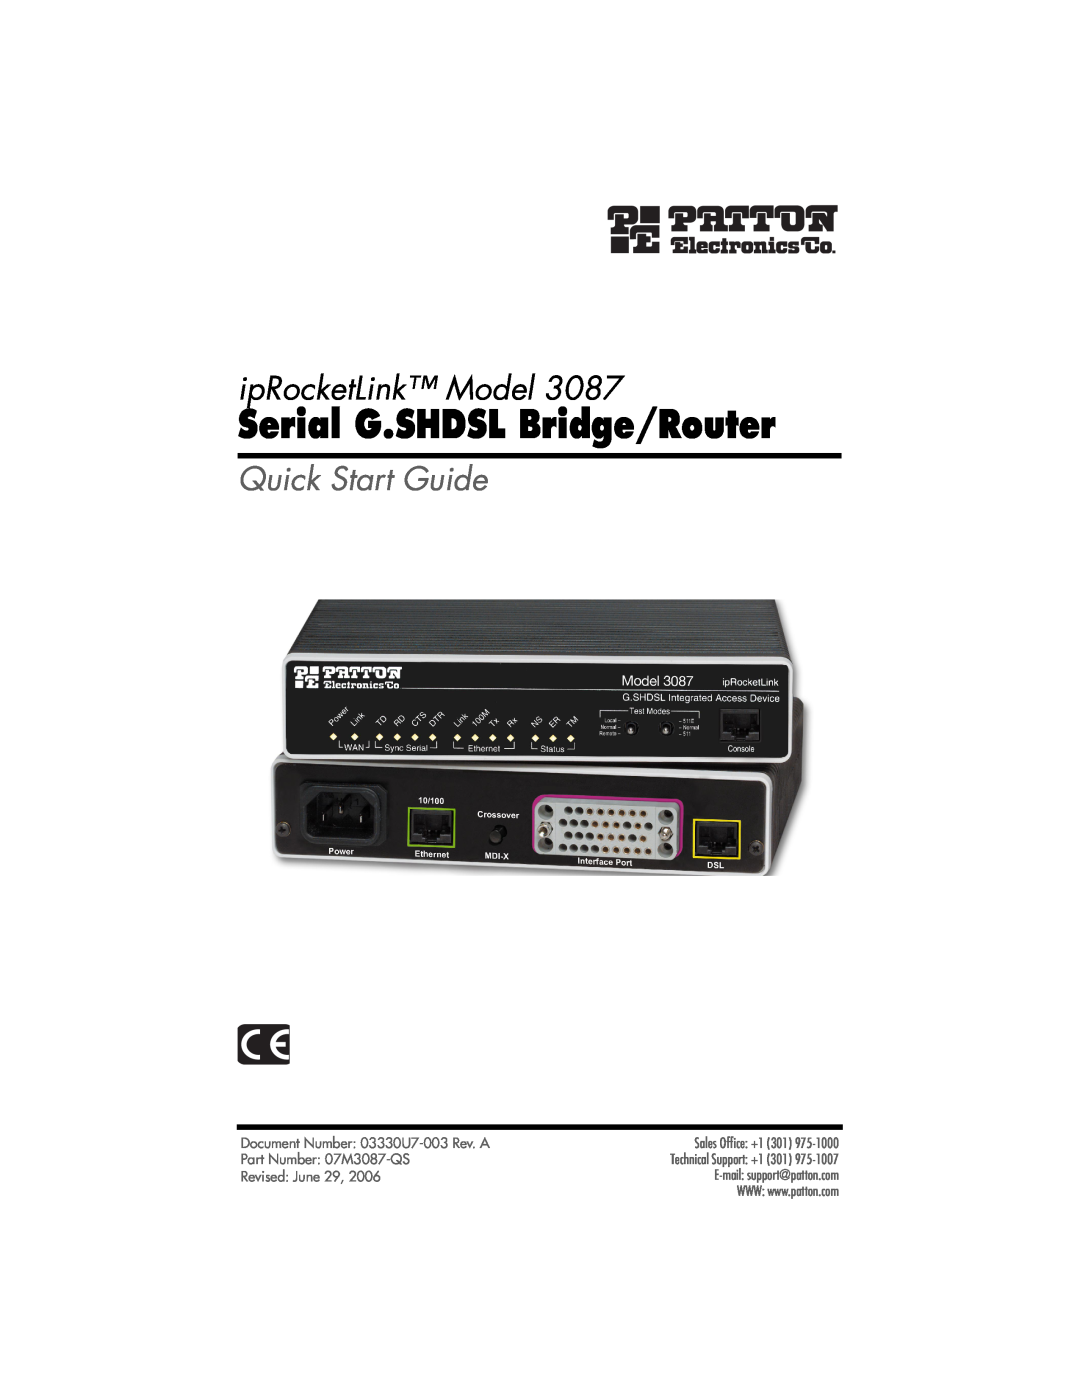 Patton electronic 3087 quick start Serial G.SHDSL Bridge/Router, ipRocketLink Model, Quick Start Guide, Revised June 29 